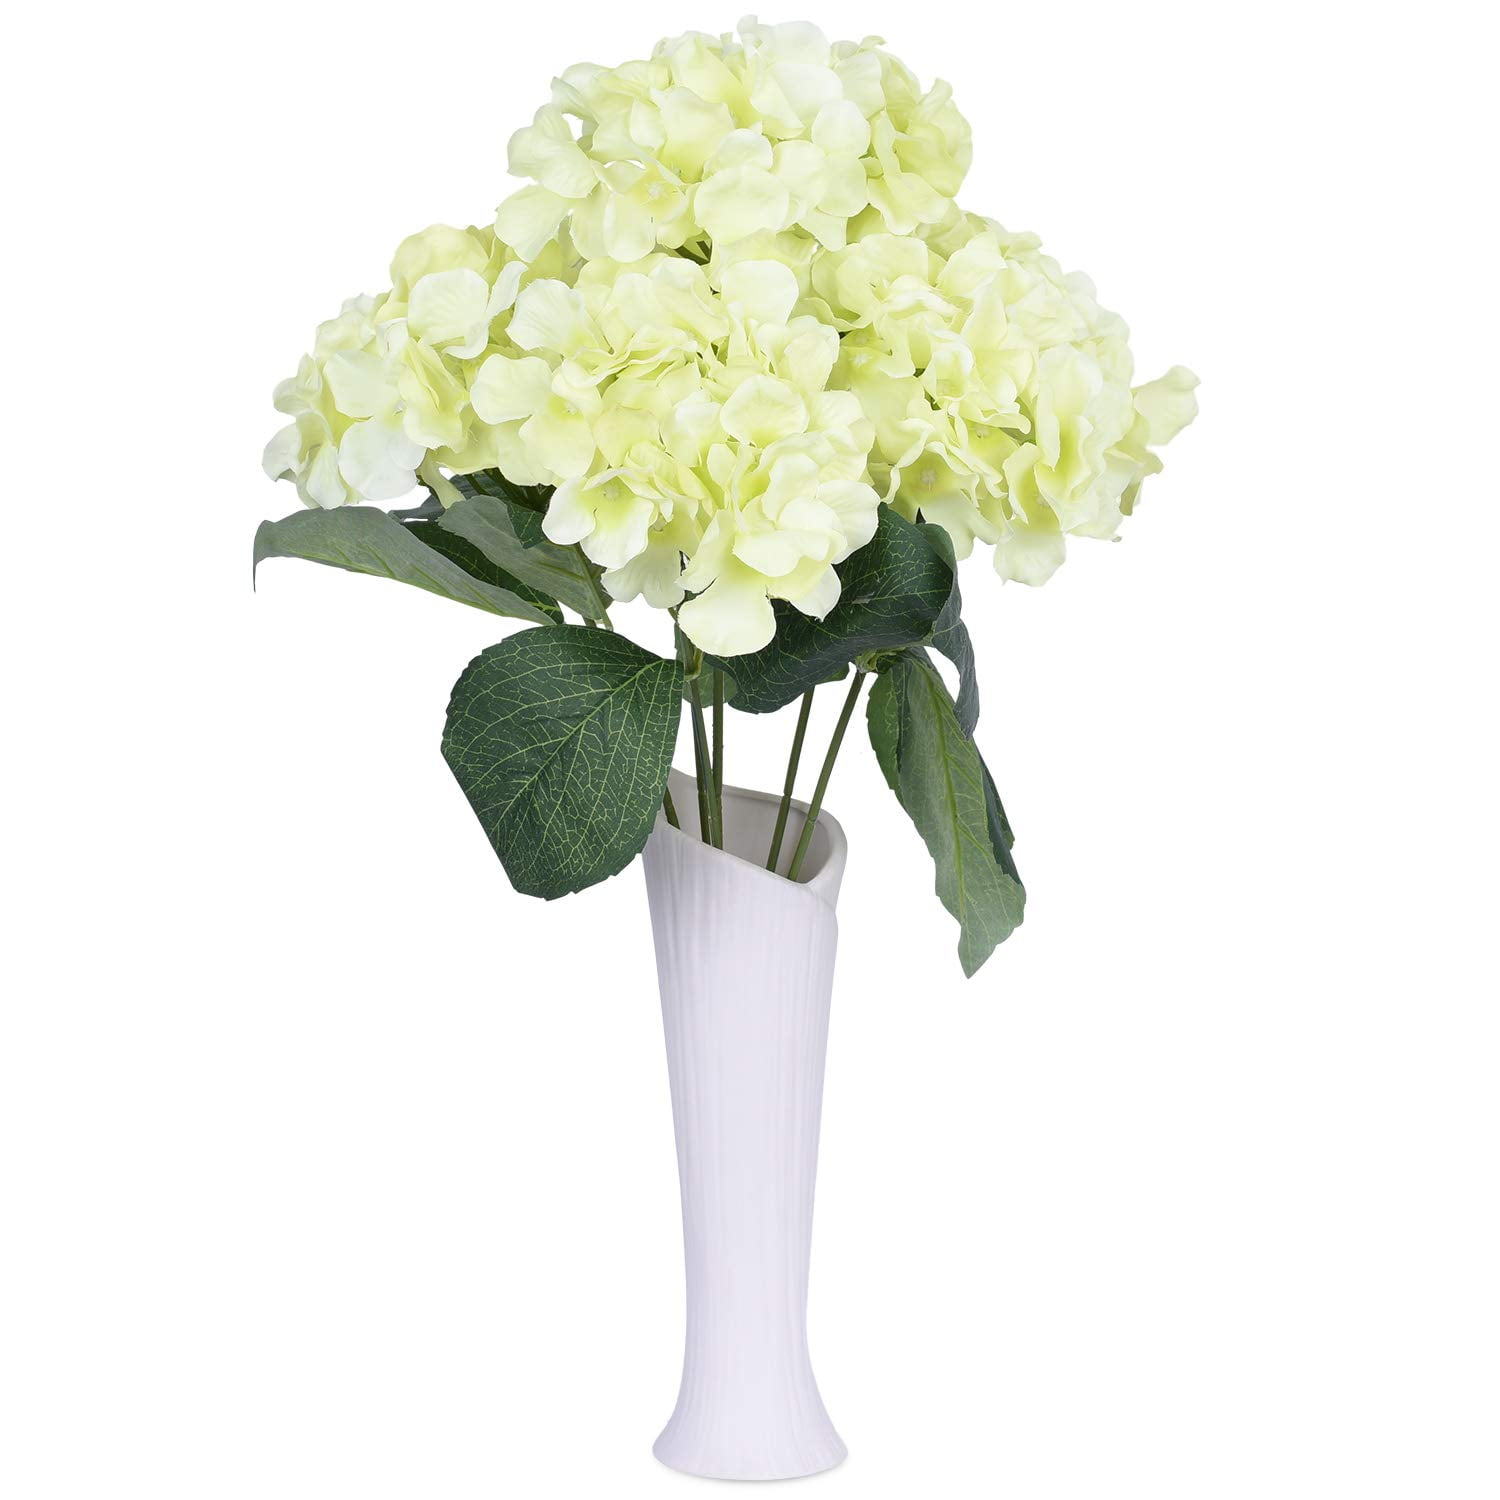 6 Head Artificial Silk Flowers Wedding Bouquet Bridal Hydrangea Home Party Decor 